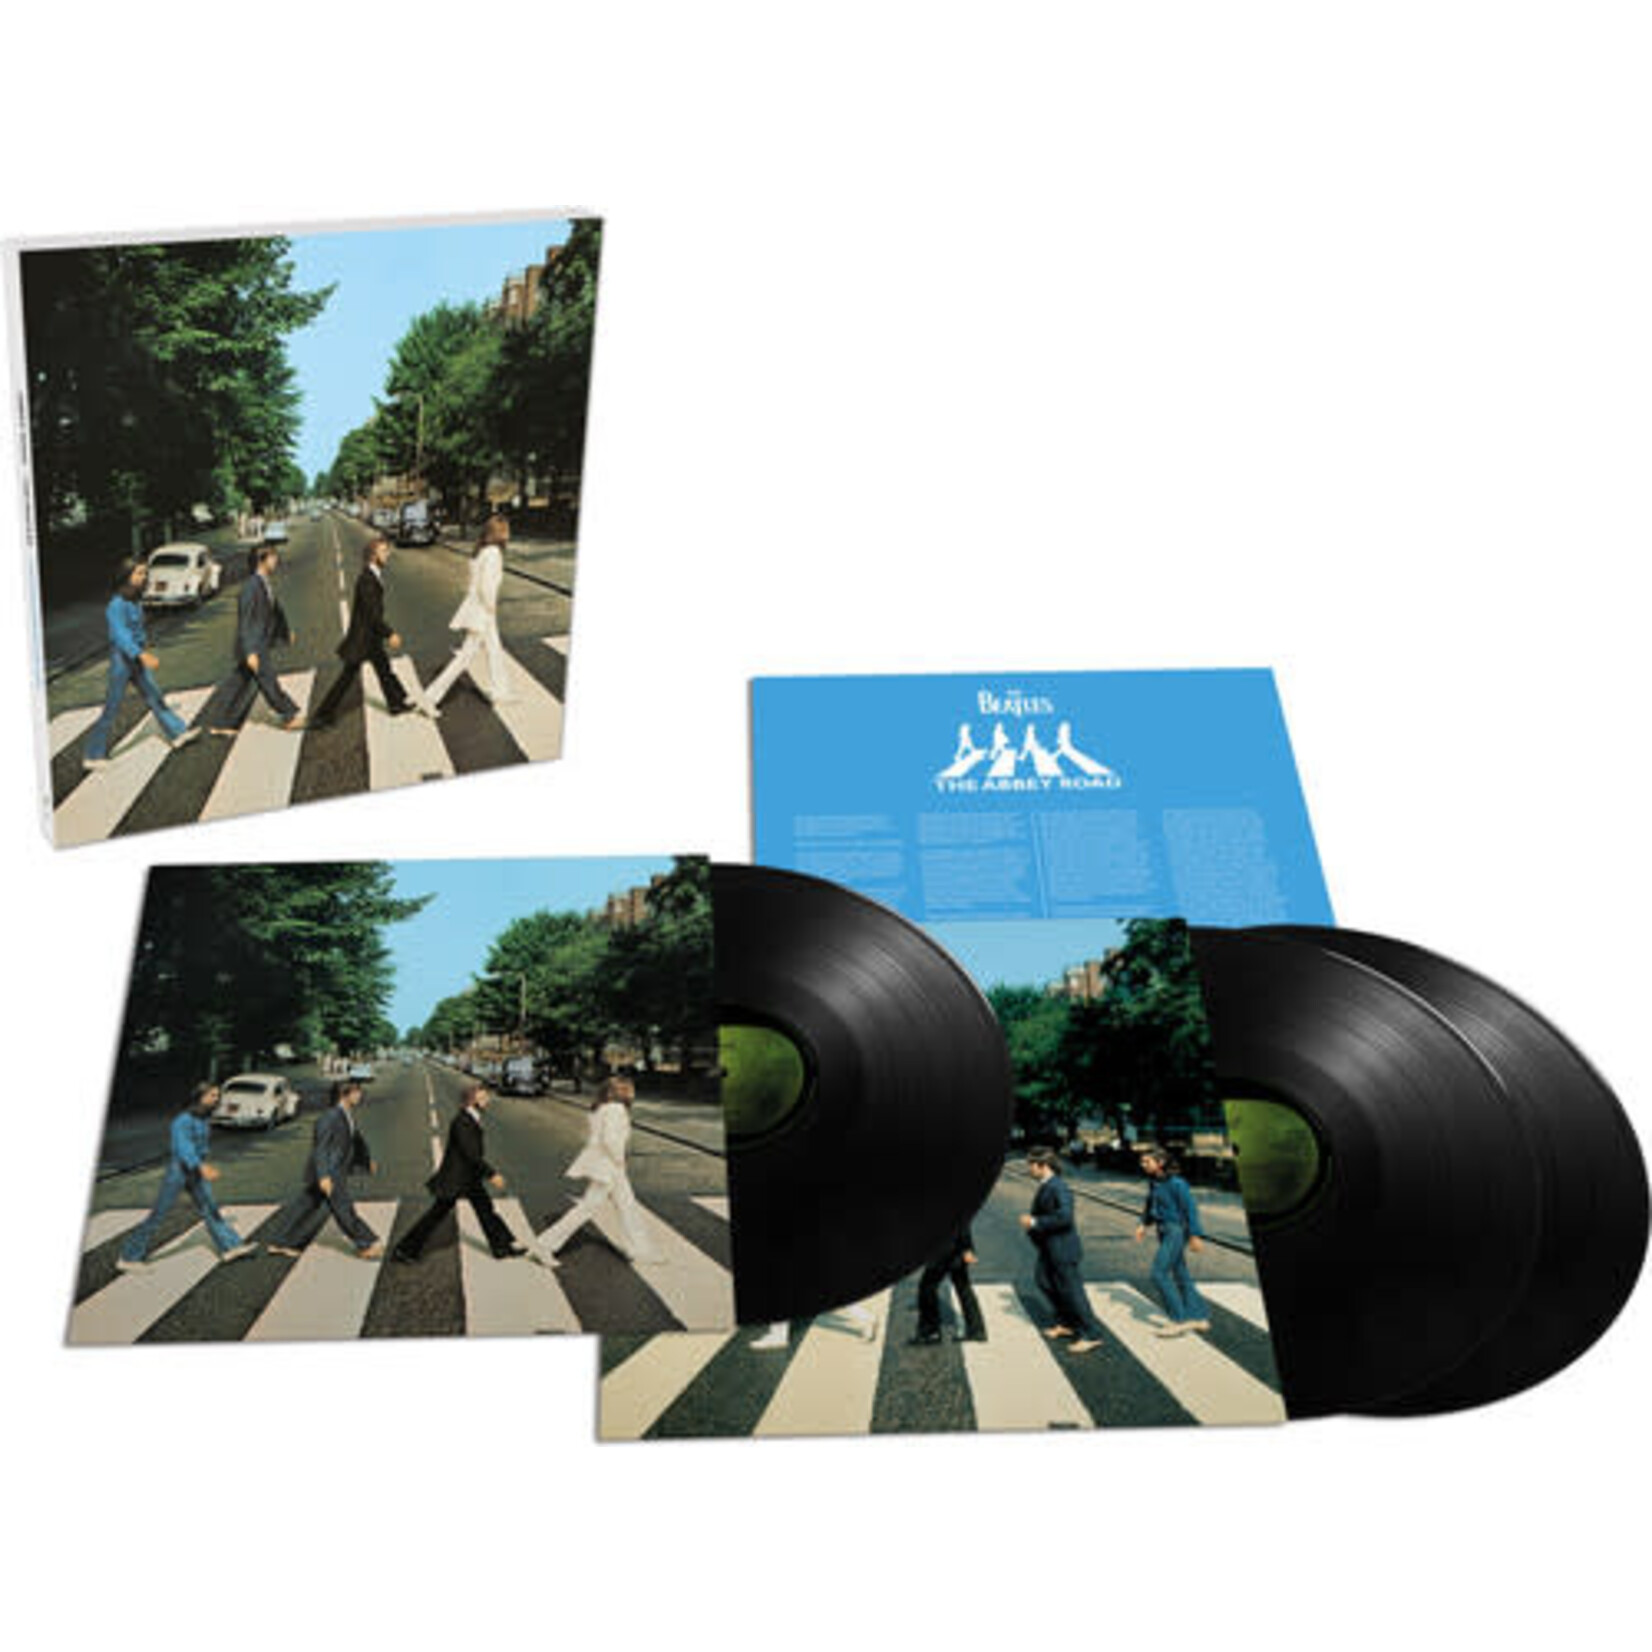 Beatles - Abbey Road (3 LP Anniversary Edition) - CAP800744 - Vinyl LP (NEW)